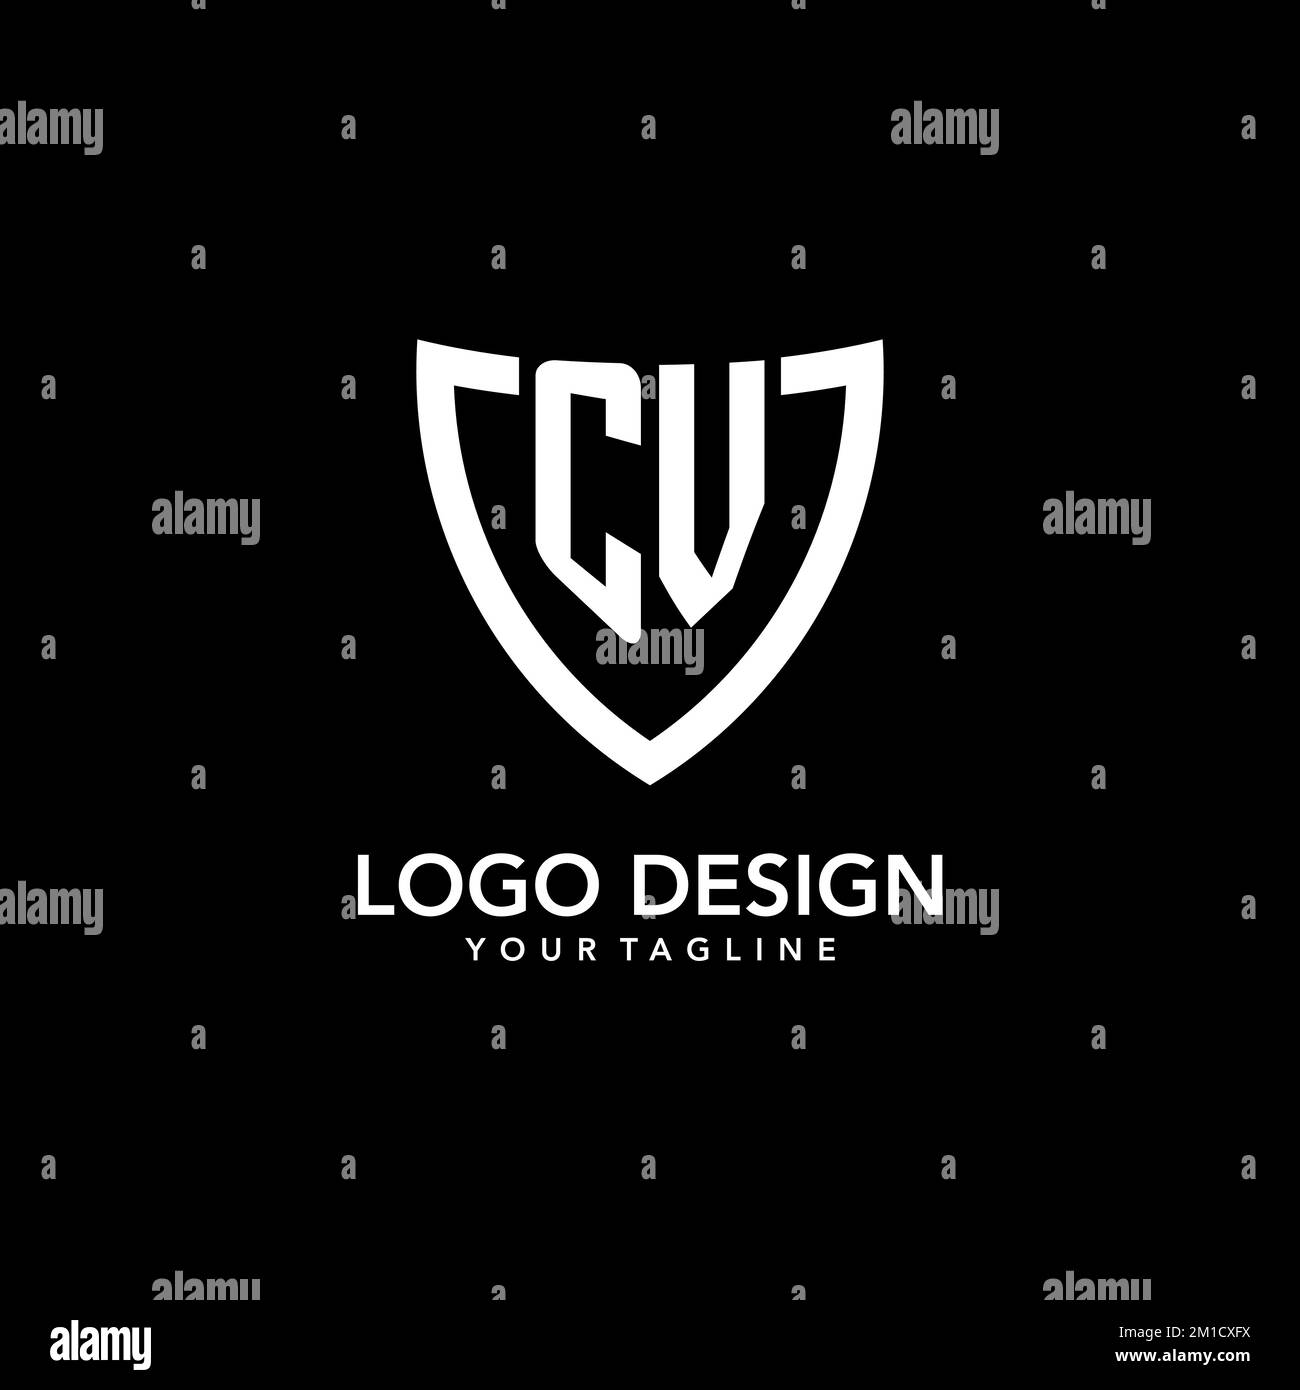 CV monogram initial logo with clean modern shield icon design inspiration Stock Vector